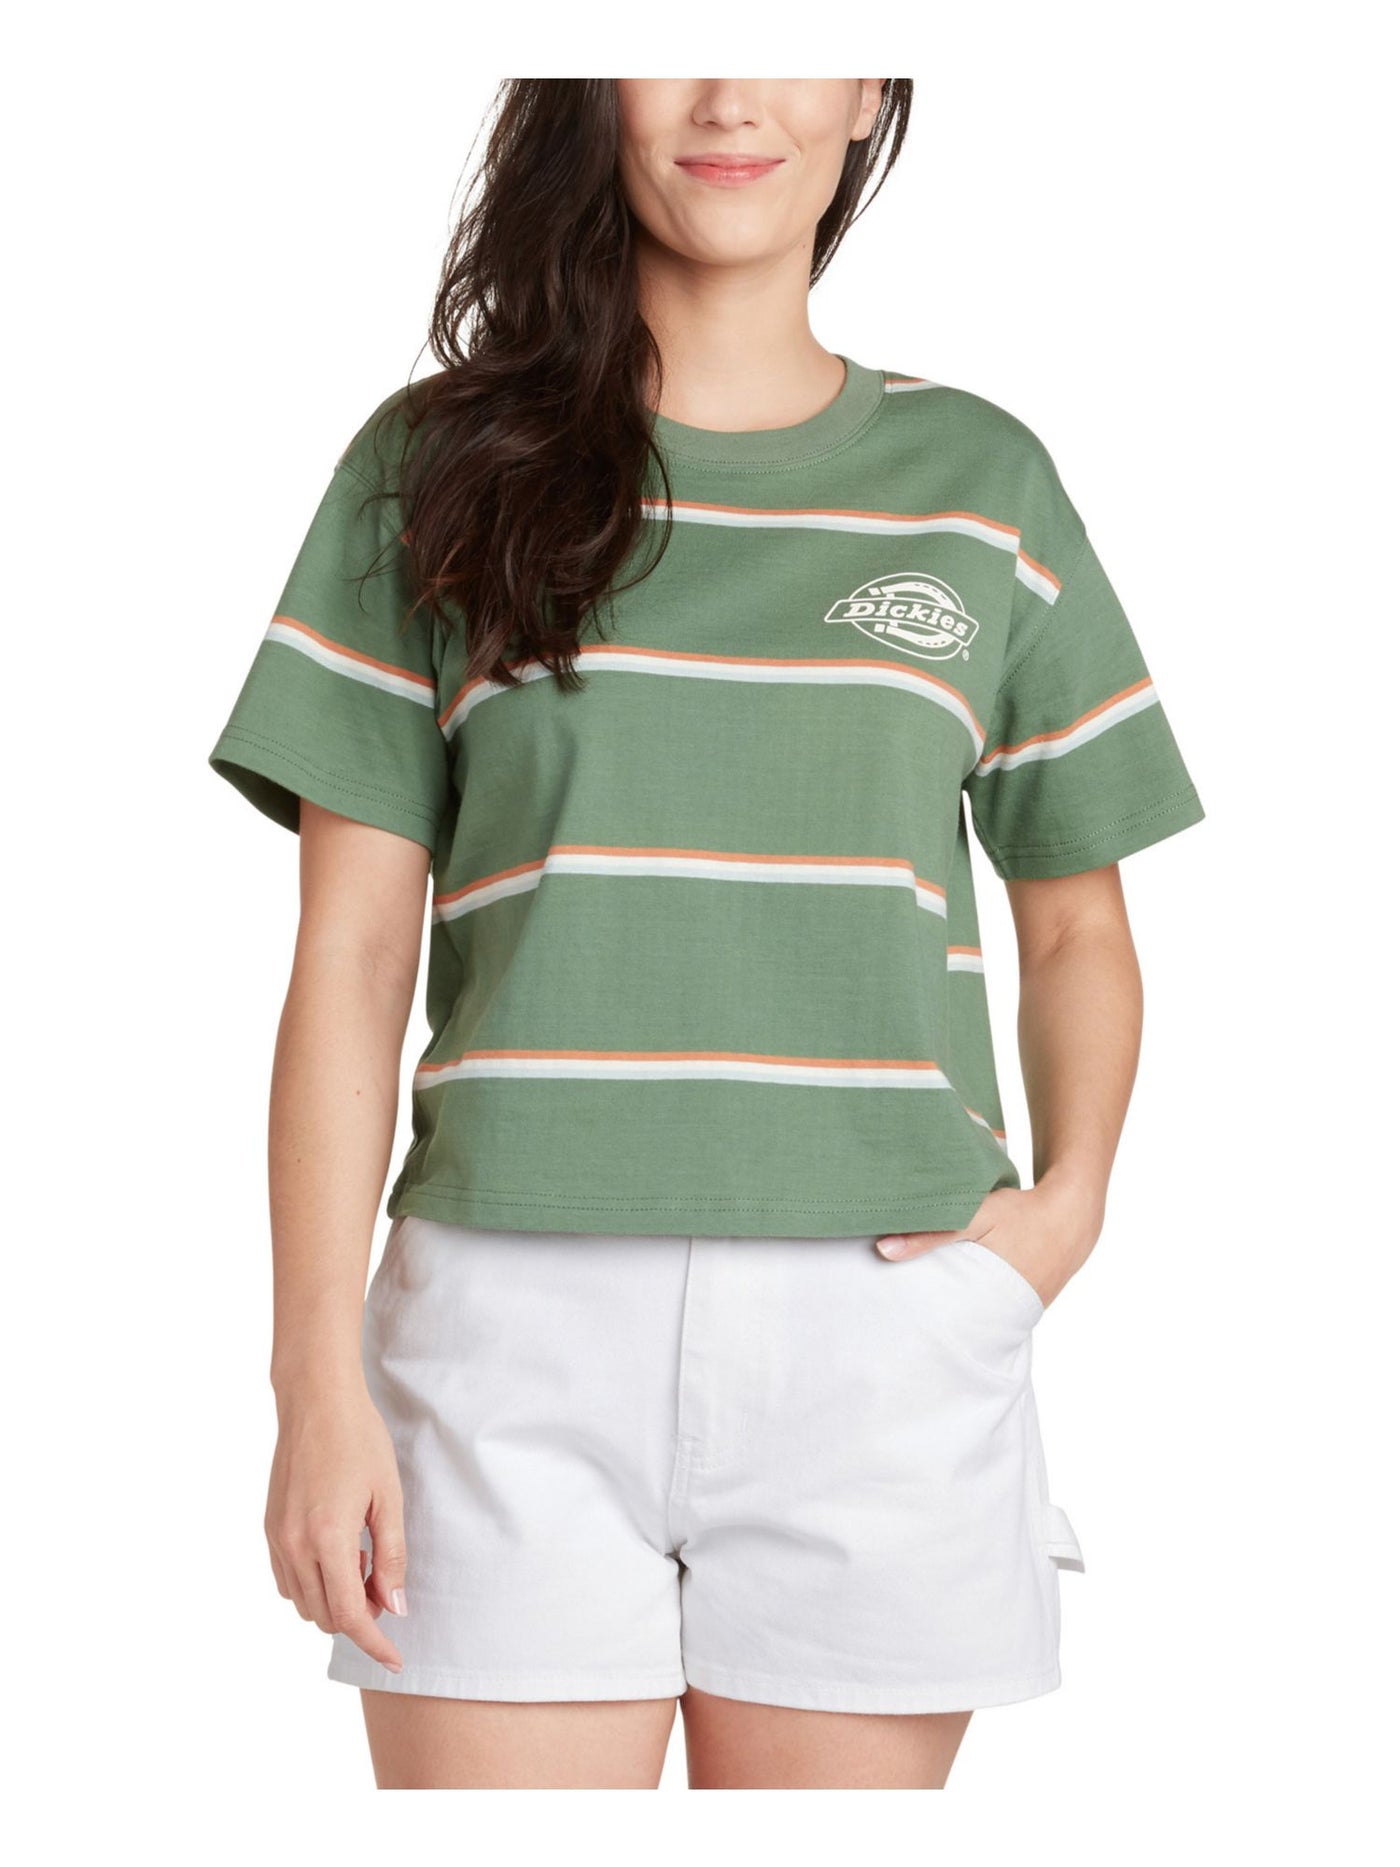 DICKIES Womens Green Ribbed Striped Short Sleeve Crew Neck T-Shirt Juniors M